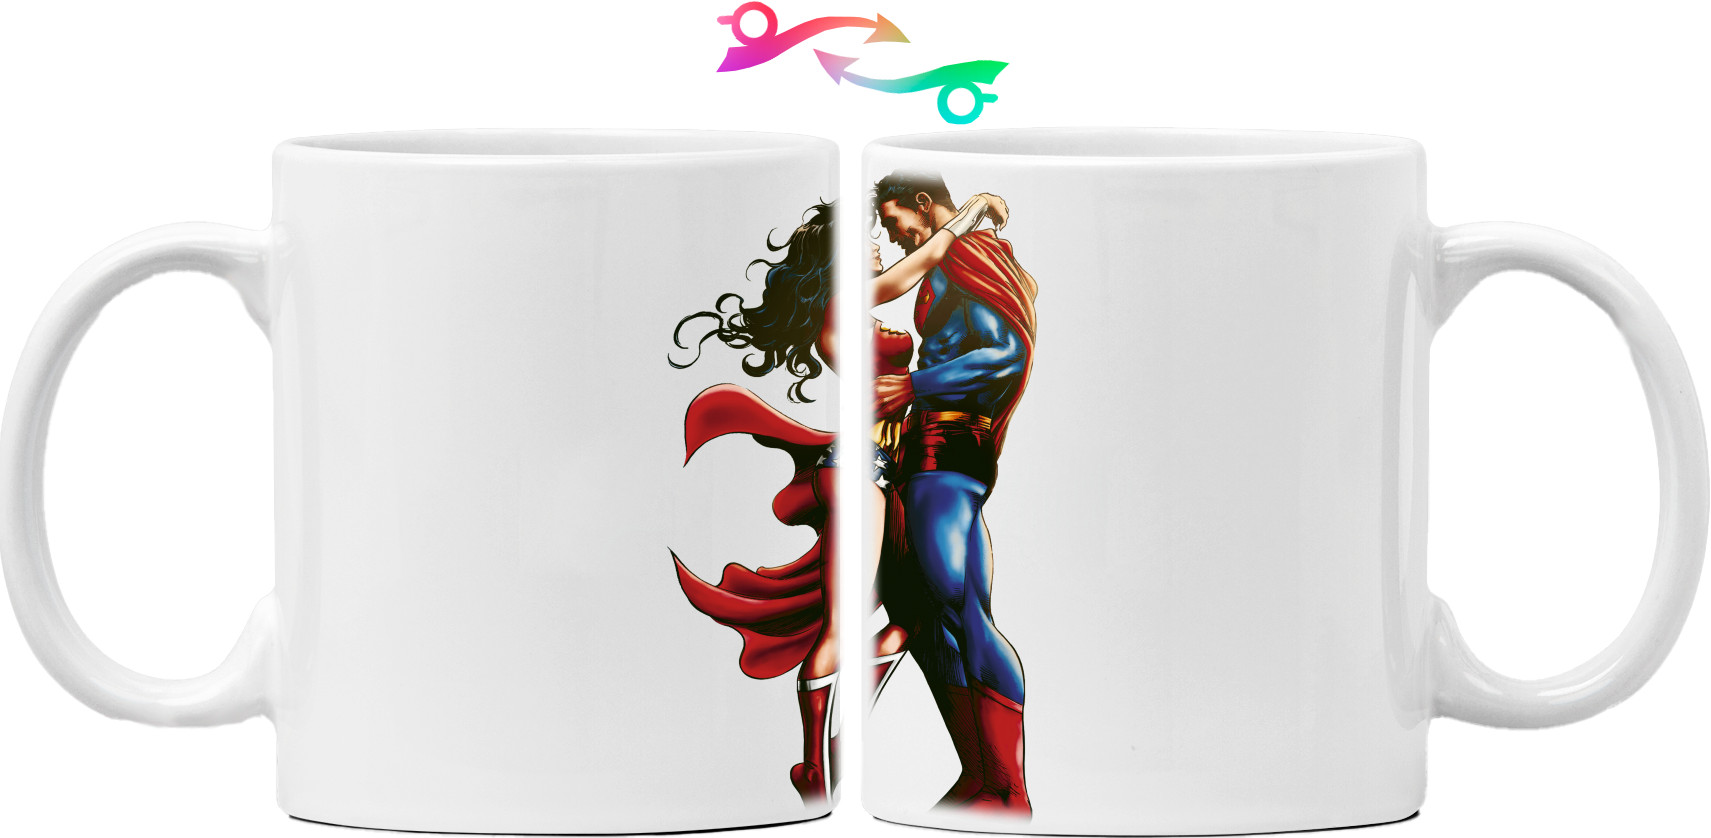 Superman and Wonder women